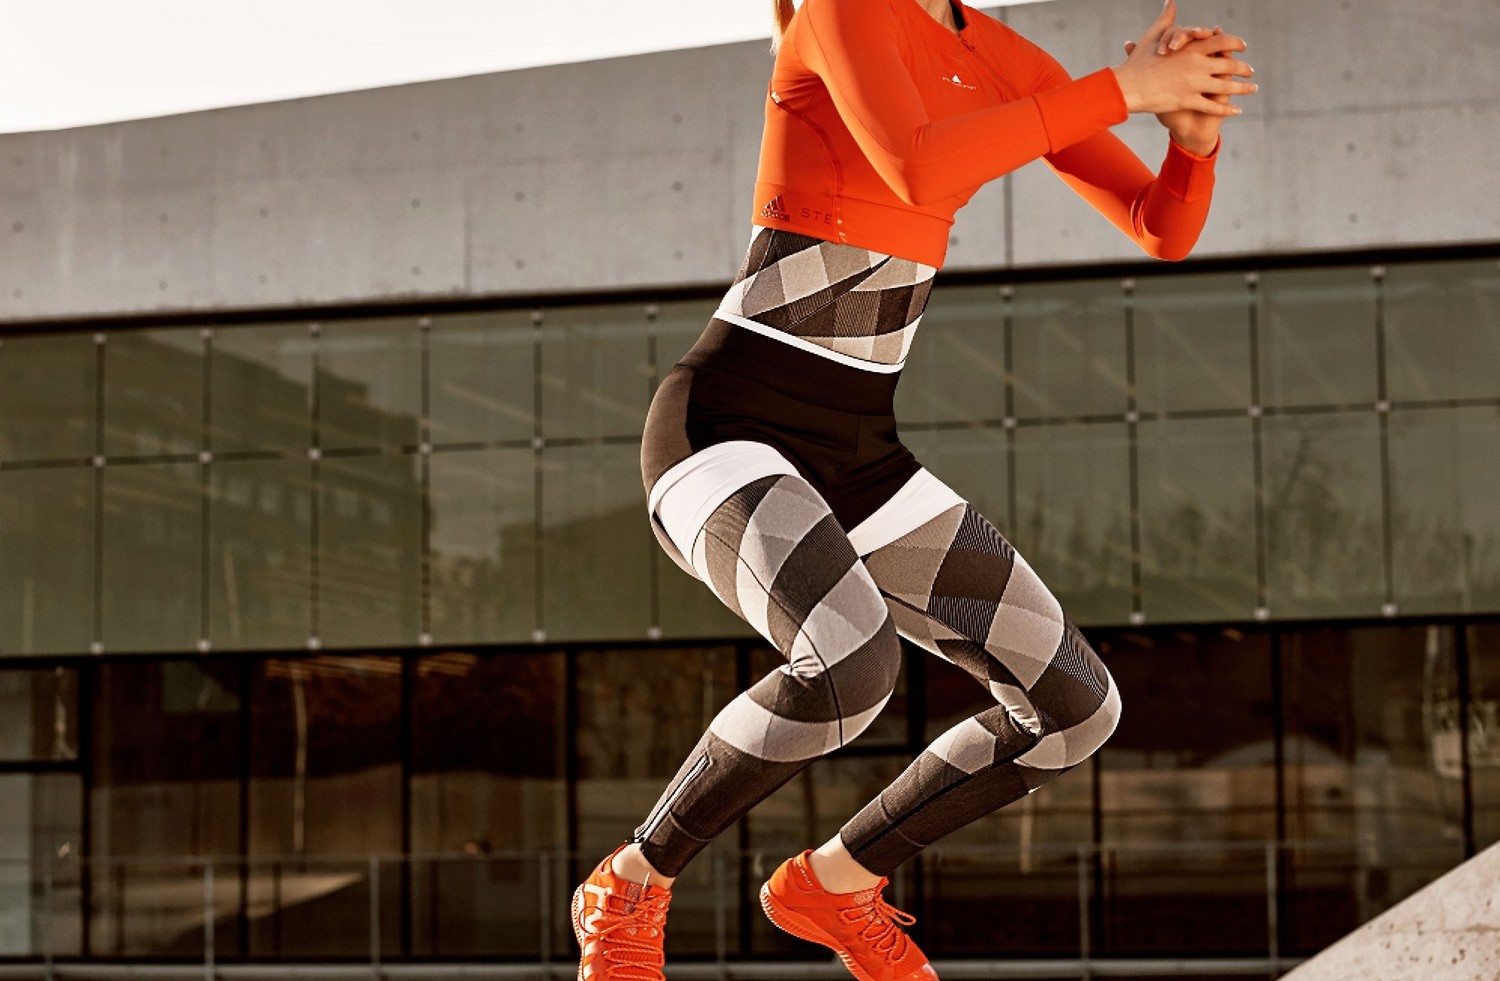 Adidas By Stella McCartney Feature Model Karlie Kloss In Fall 2017 Lookbook